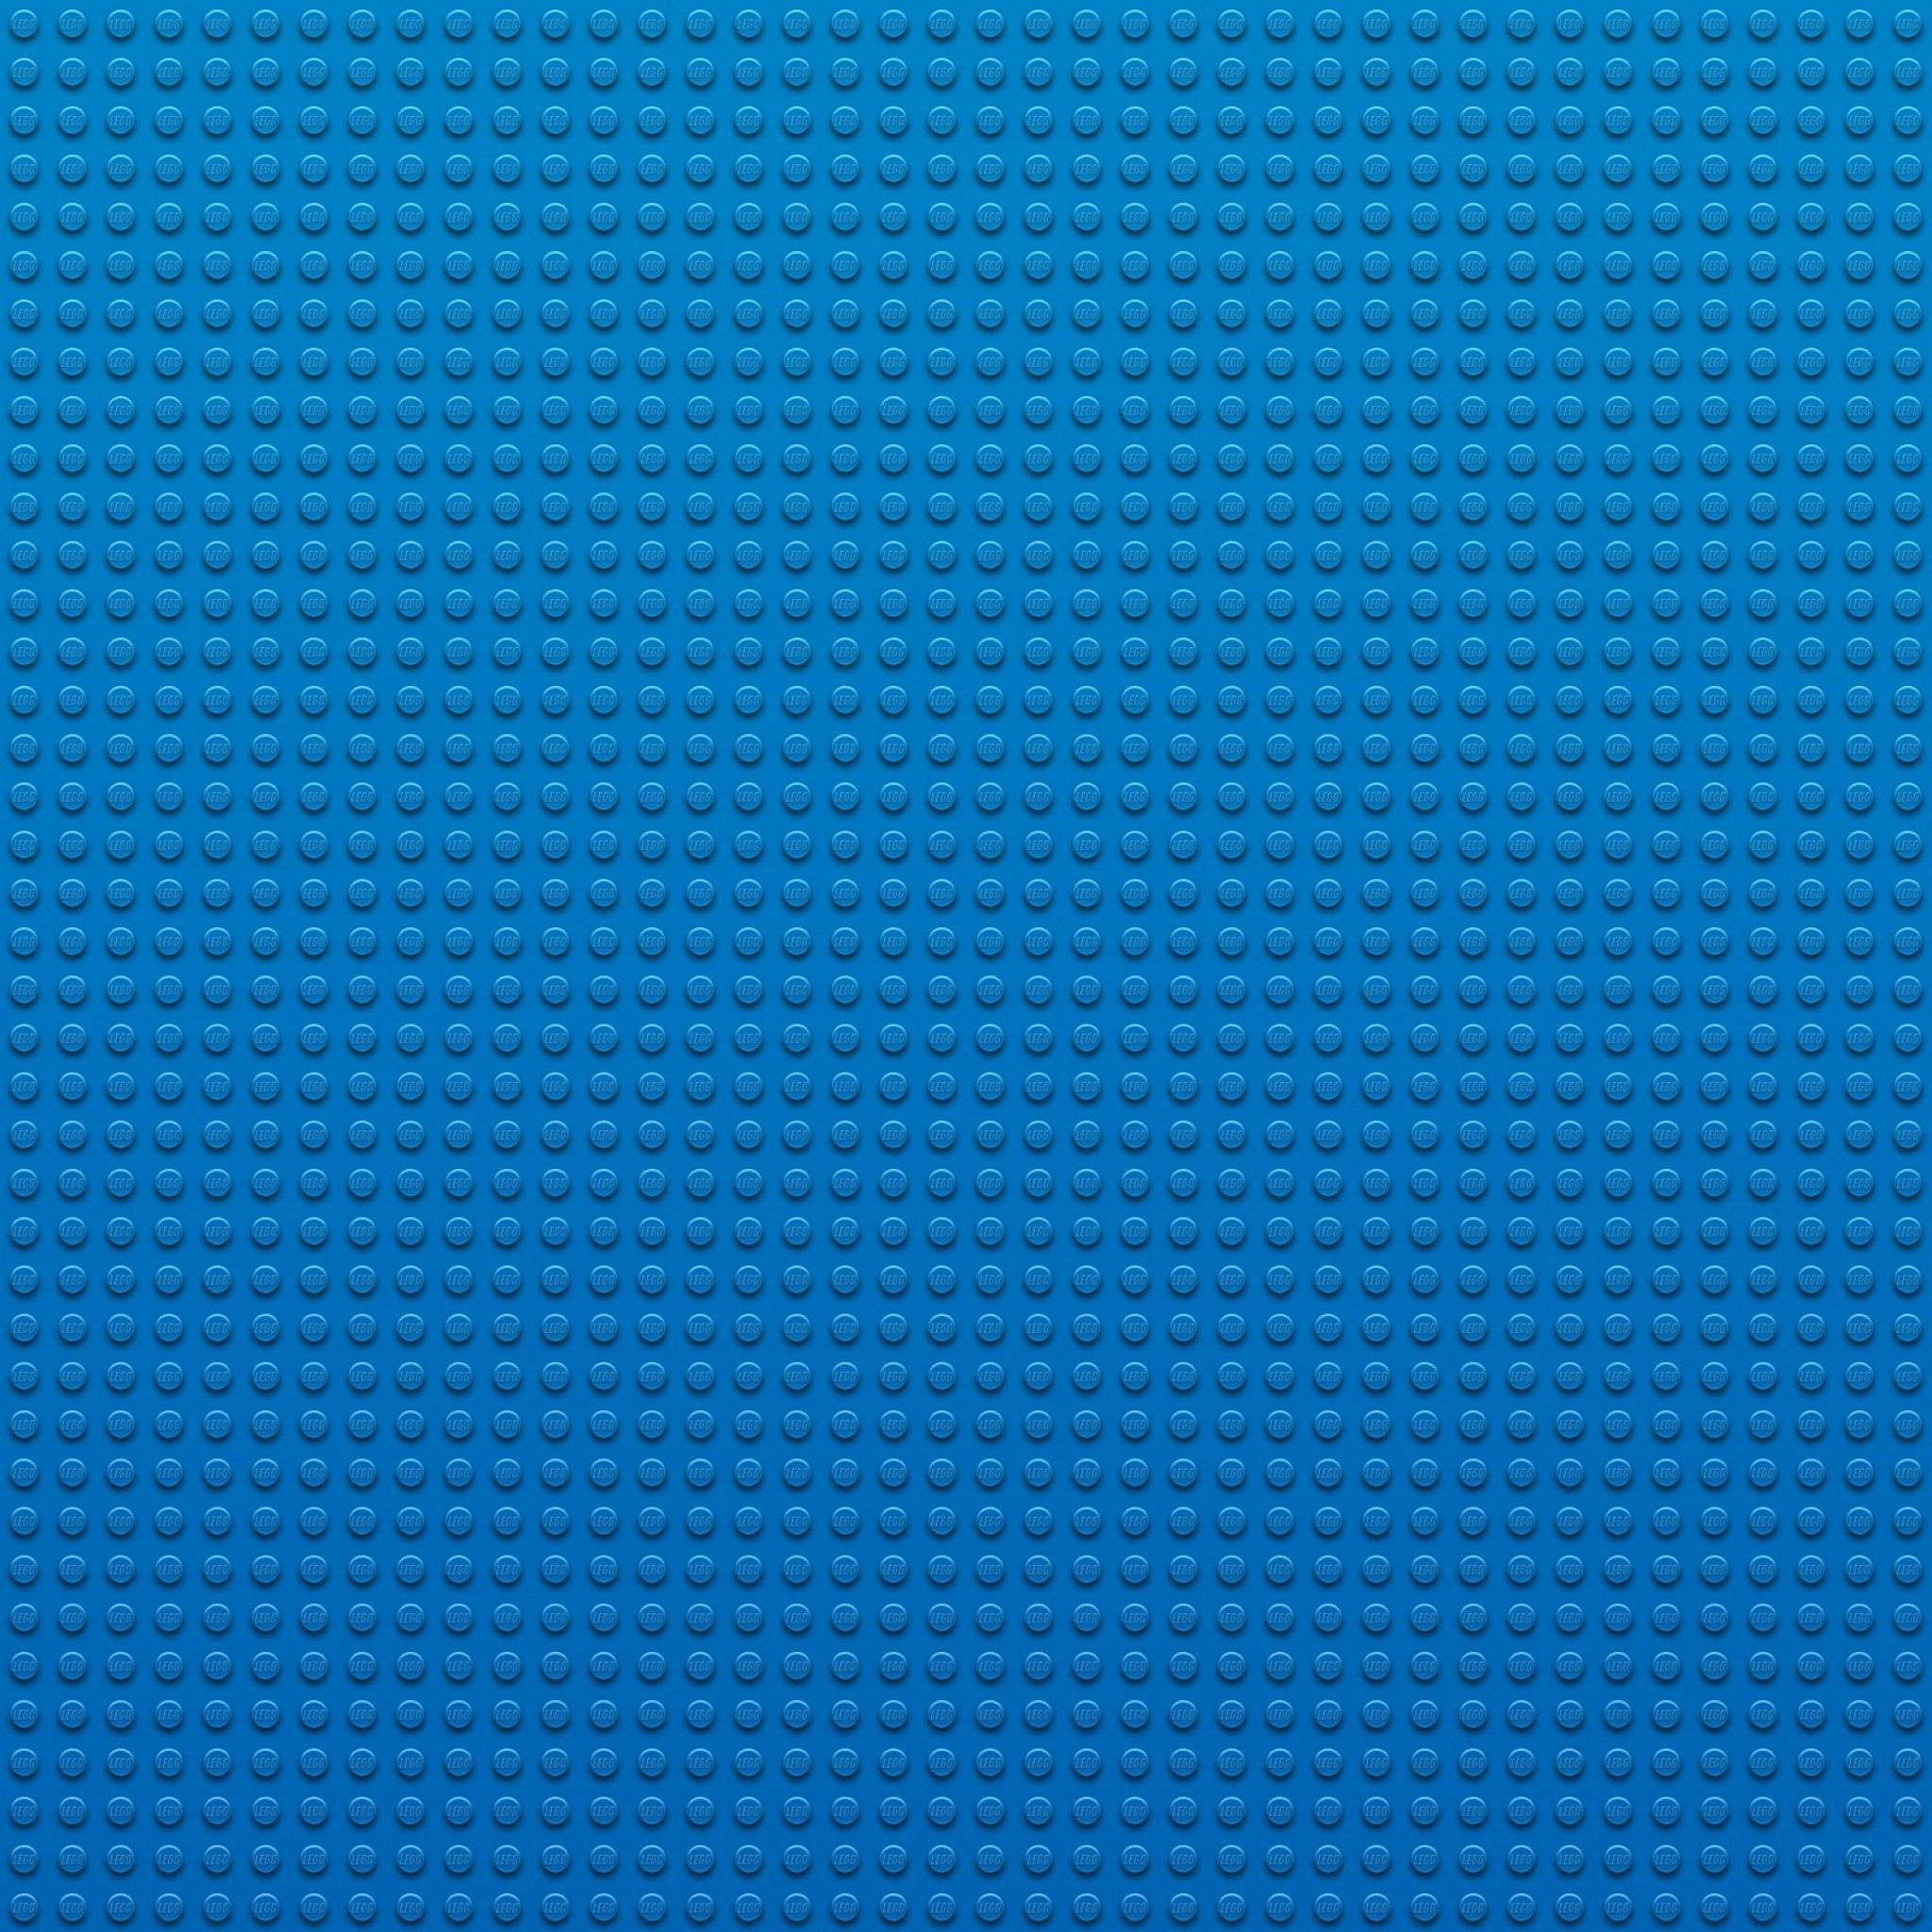 Lego Ipad Wallpapers